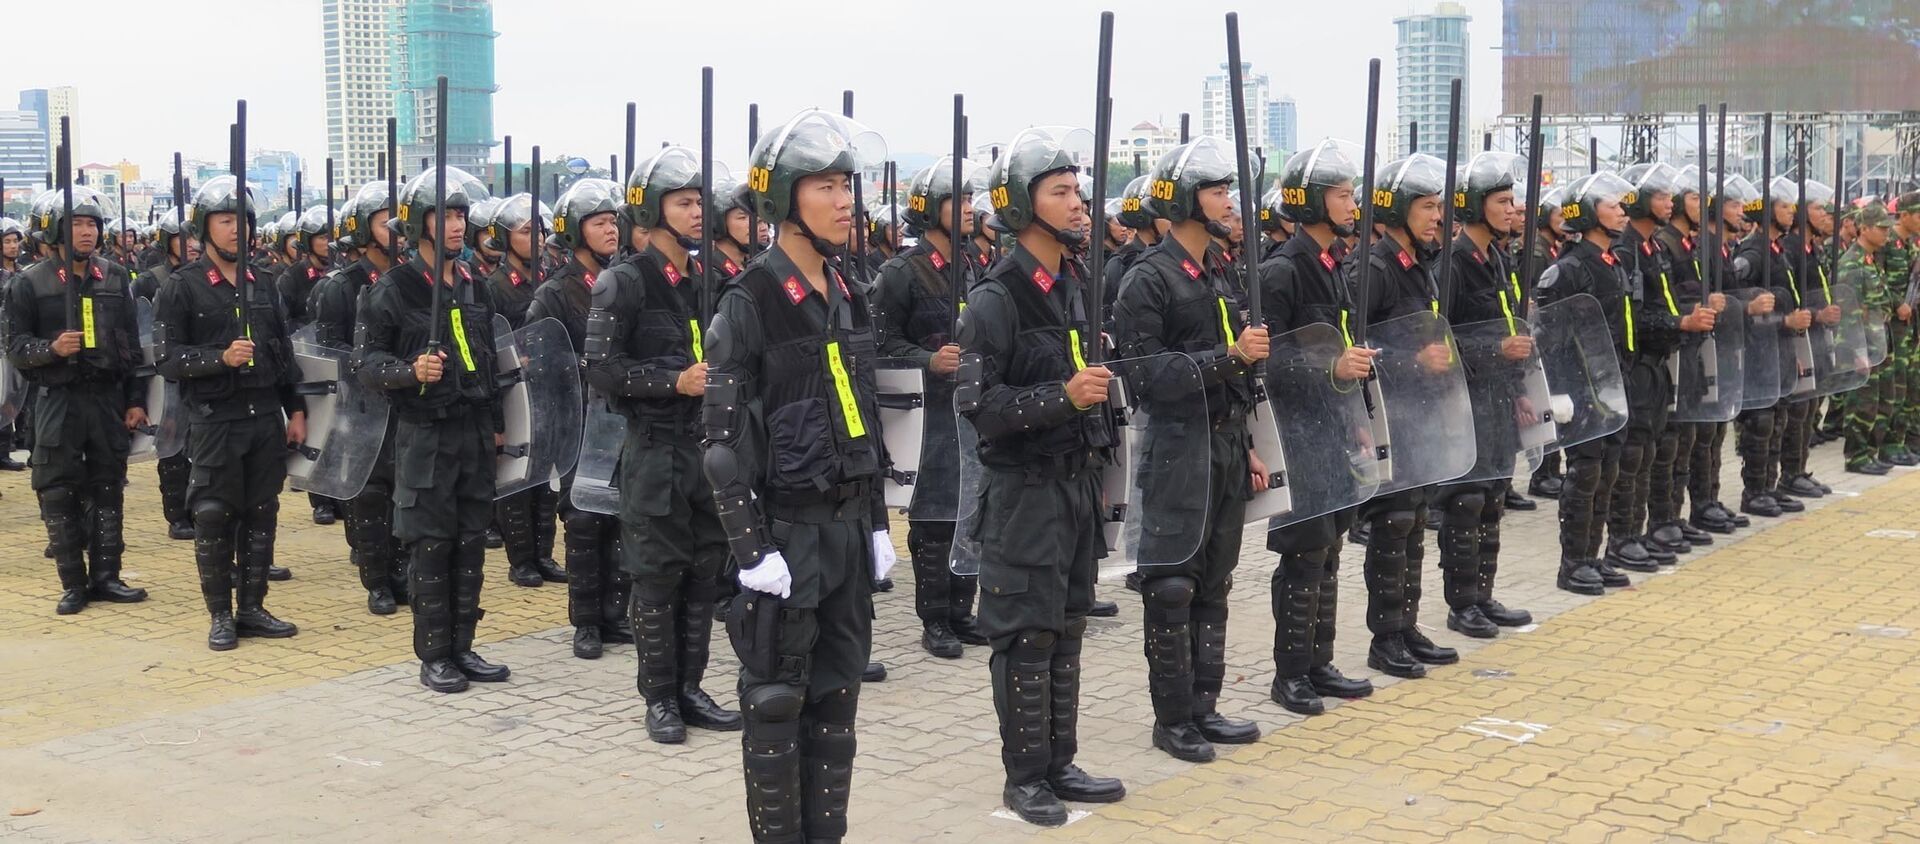 Вьетнам атэс саммит полиция подготовка полицейский - Sputnik Việt Nam, 1920, 08.12.2017